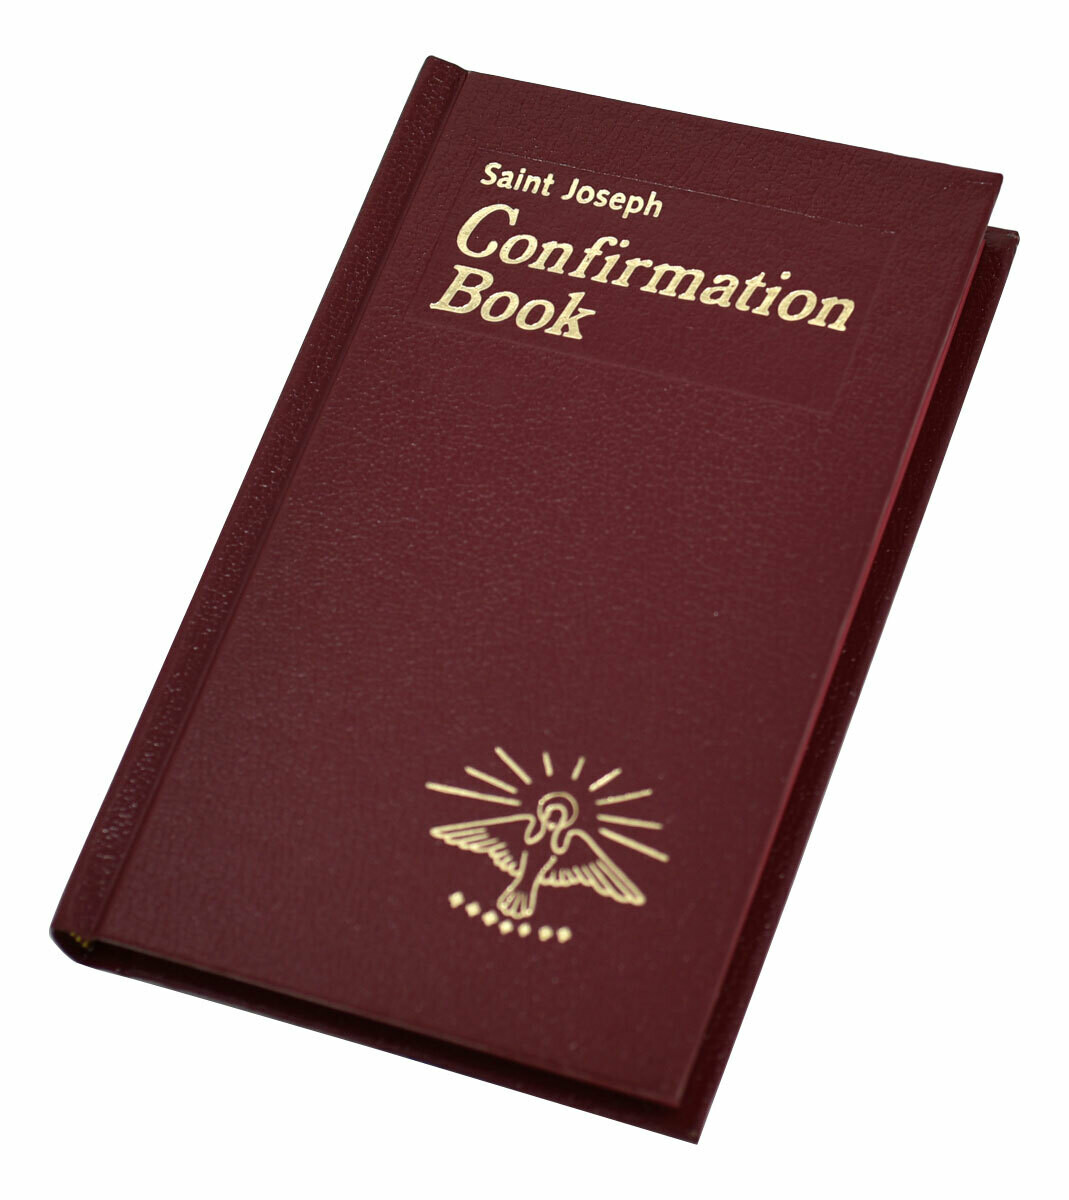 St Joseph Confirmation Book 249/04